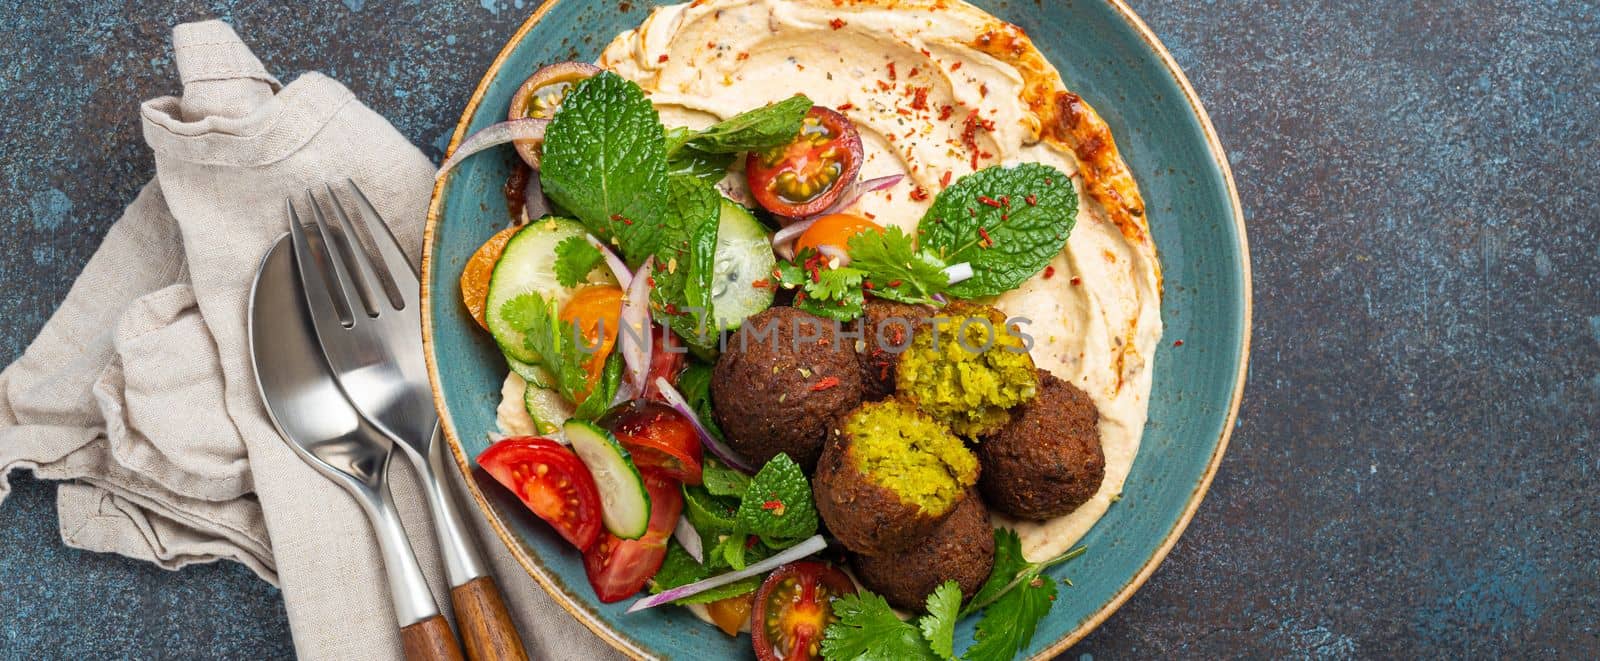 Middle Eastern Arab meal with fried falafel, hummus, vegetables salad by its_al_dente